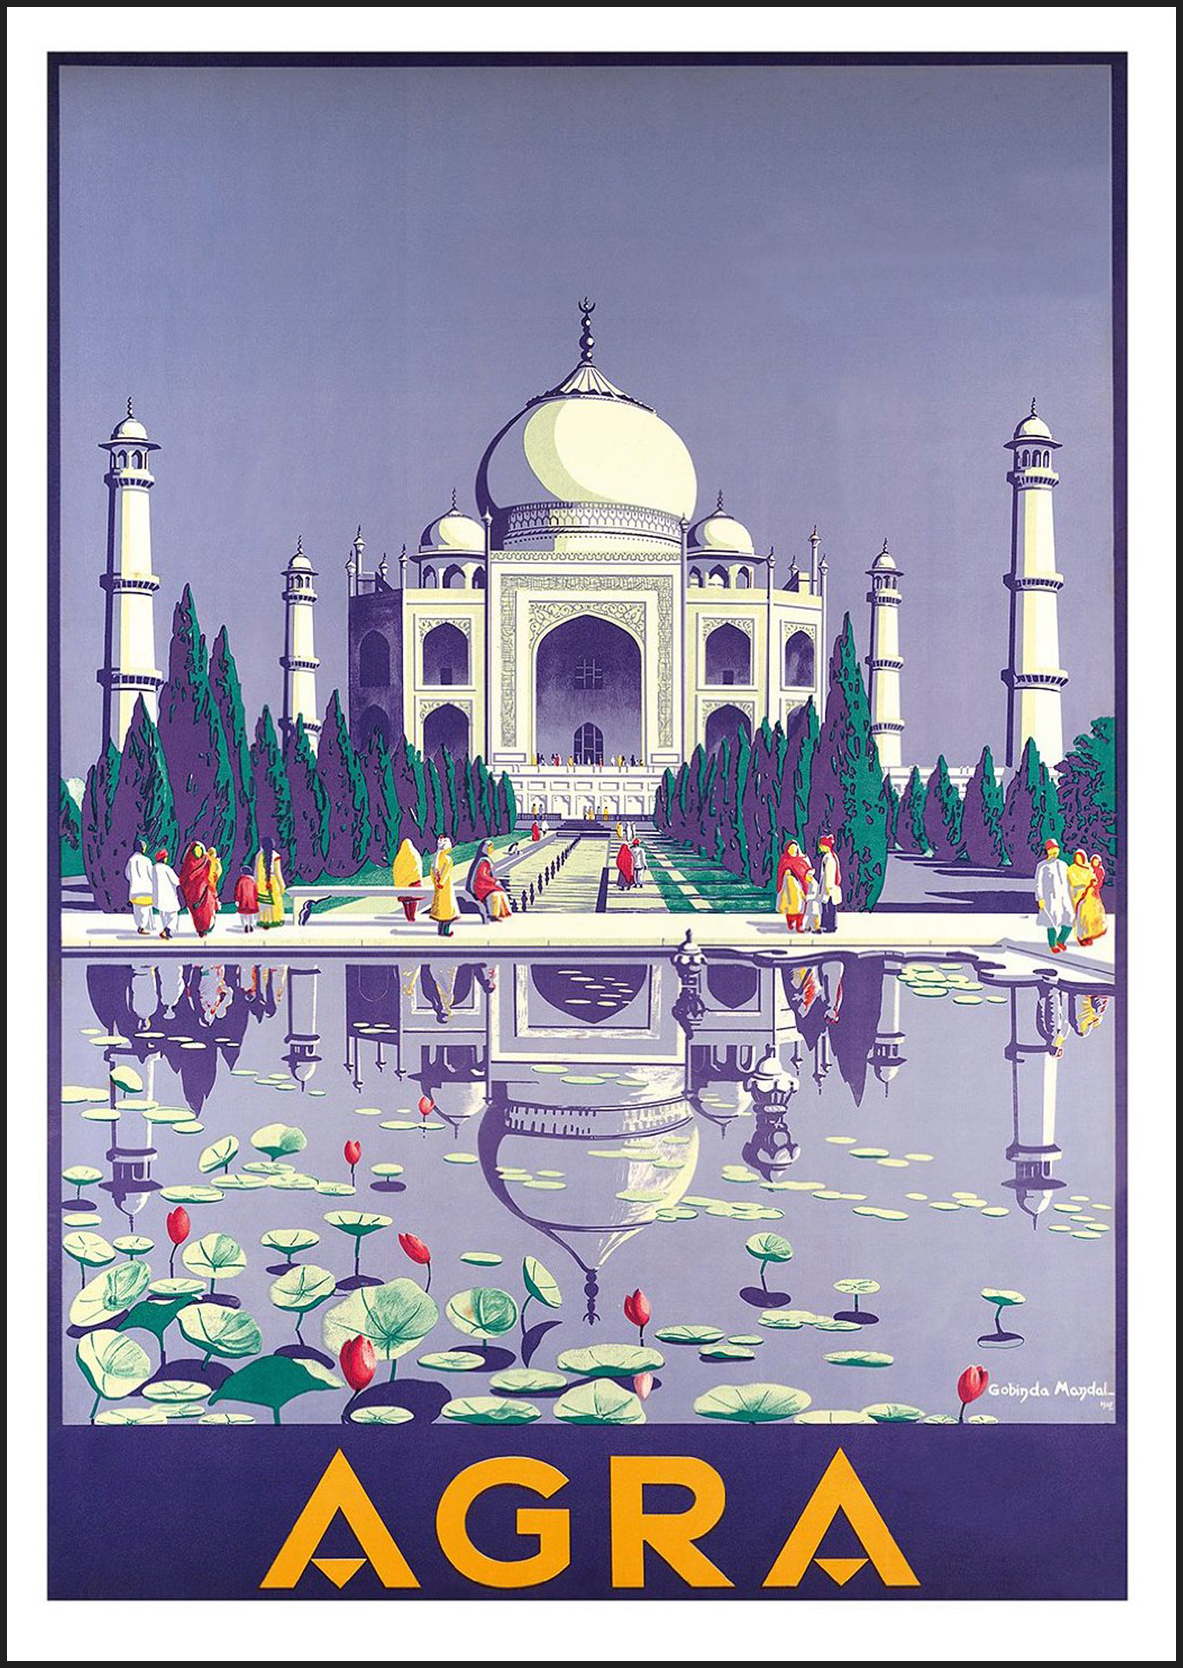 TAJ MAHAL POSTER: Vintage Agra Tourism Advert